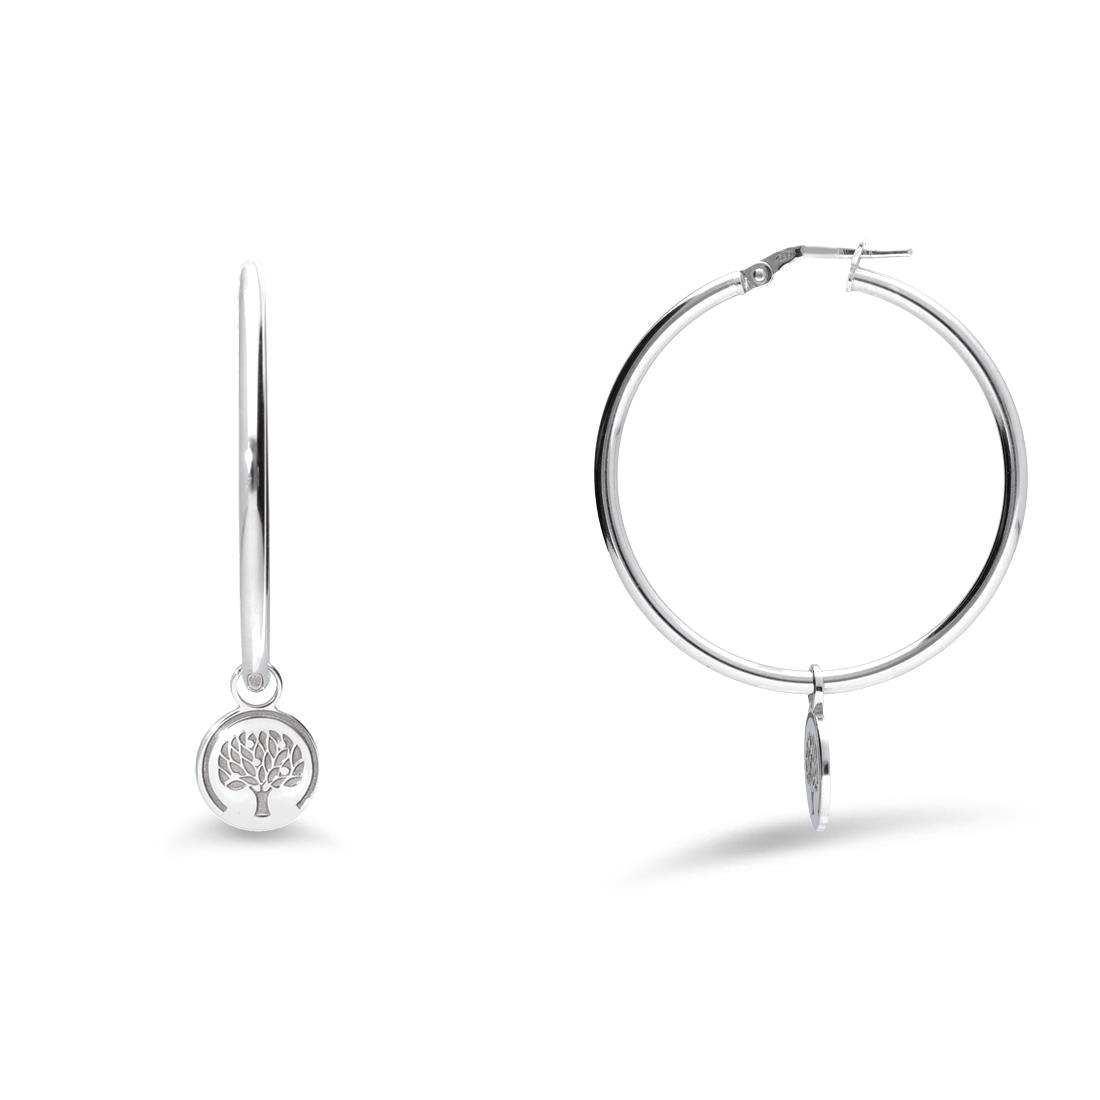 Silver hoop earrings with life tree - ALFIERI & ST. JOHN 925